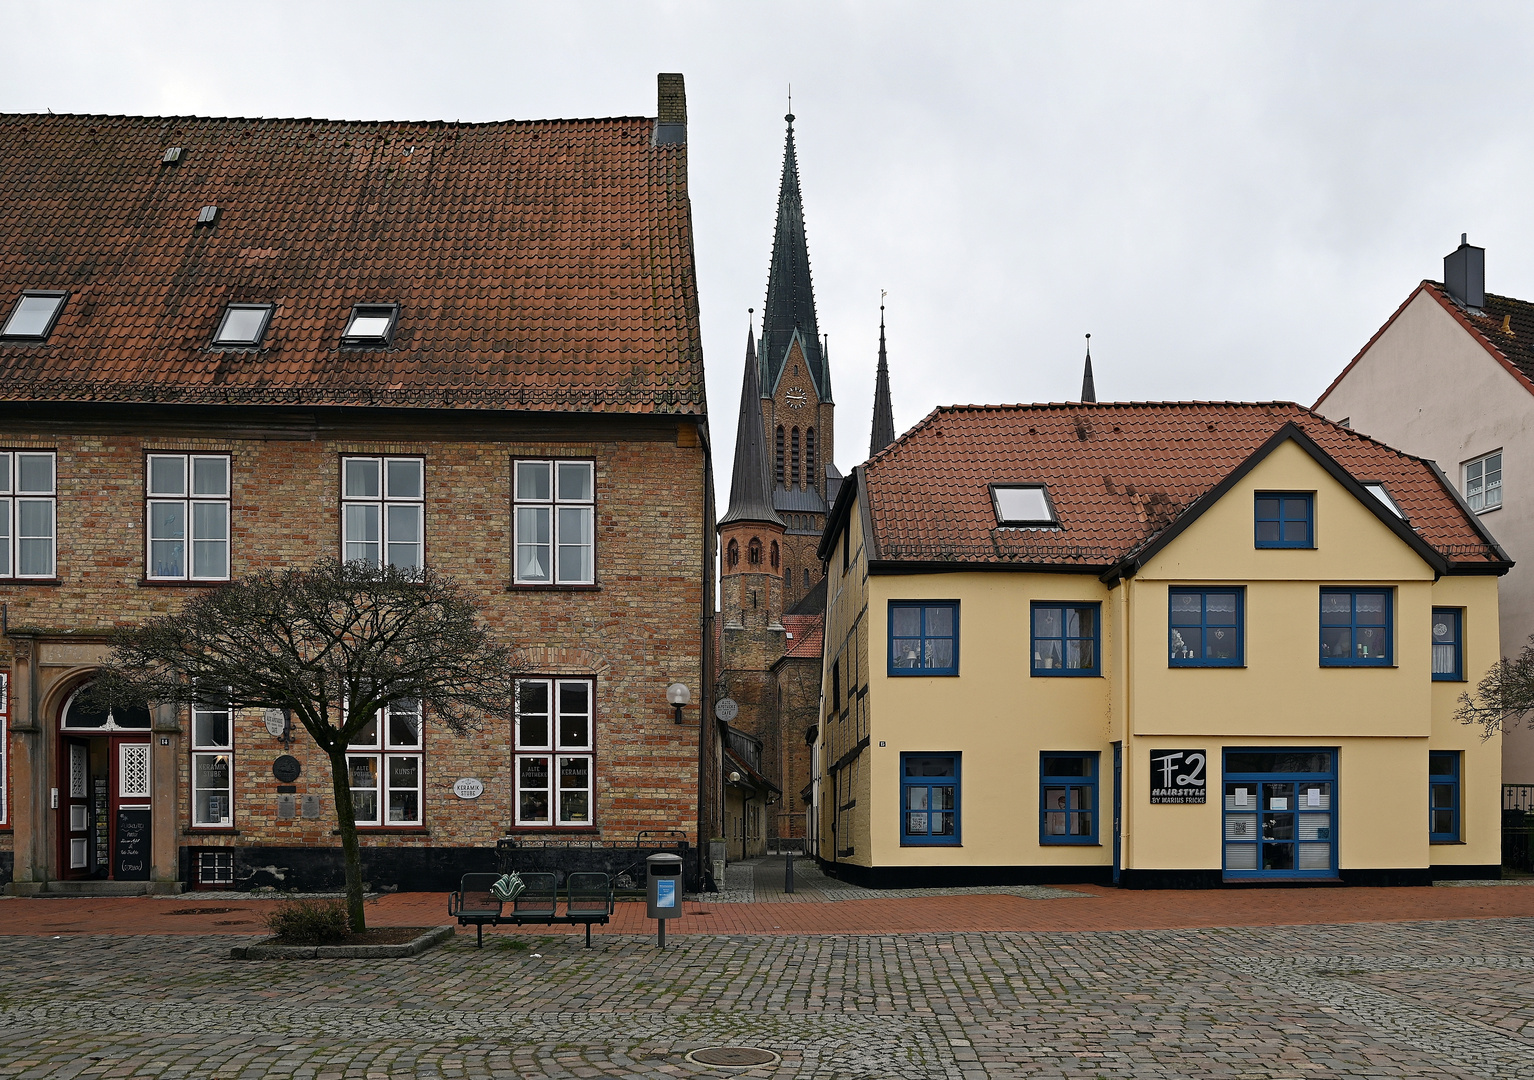 Der St.-Petri-Dom zu Schleswig im Februar 2022